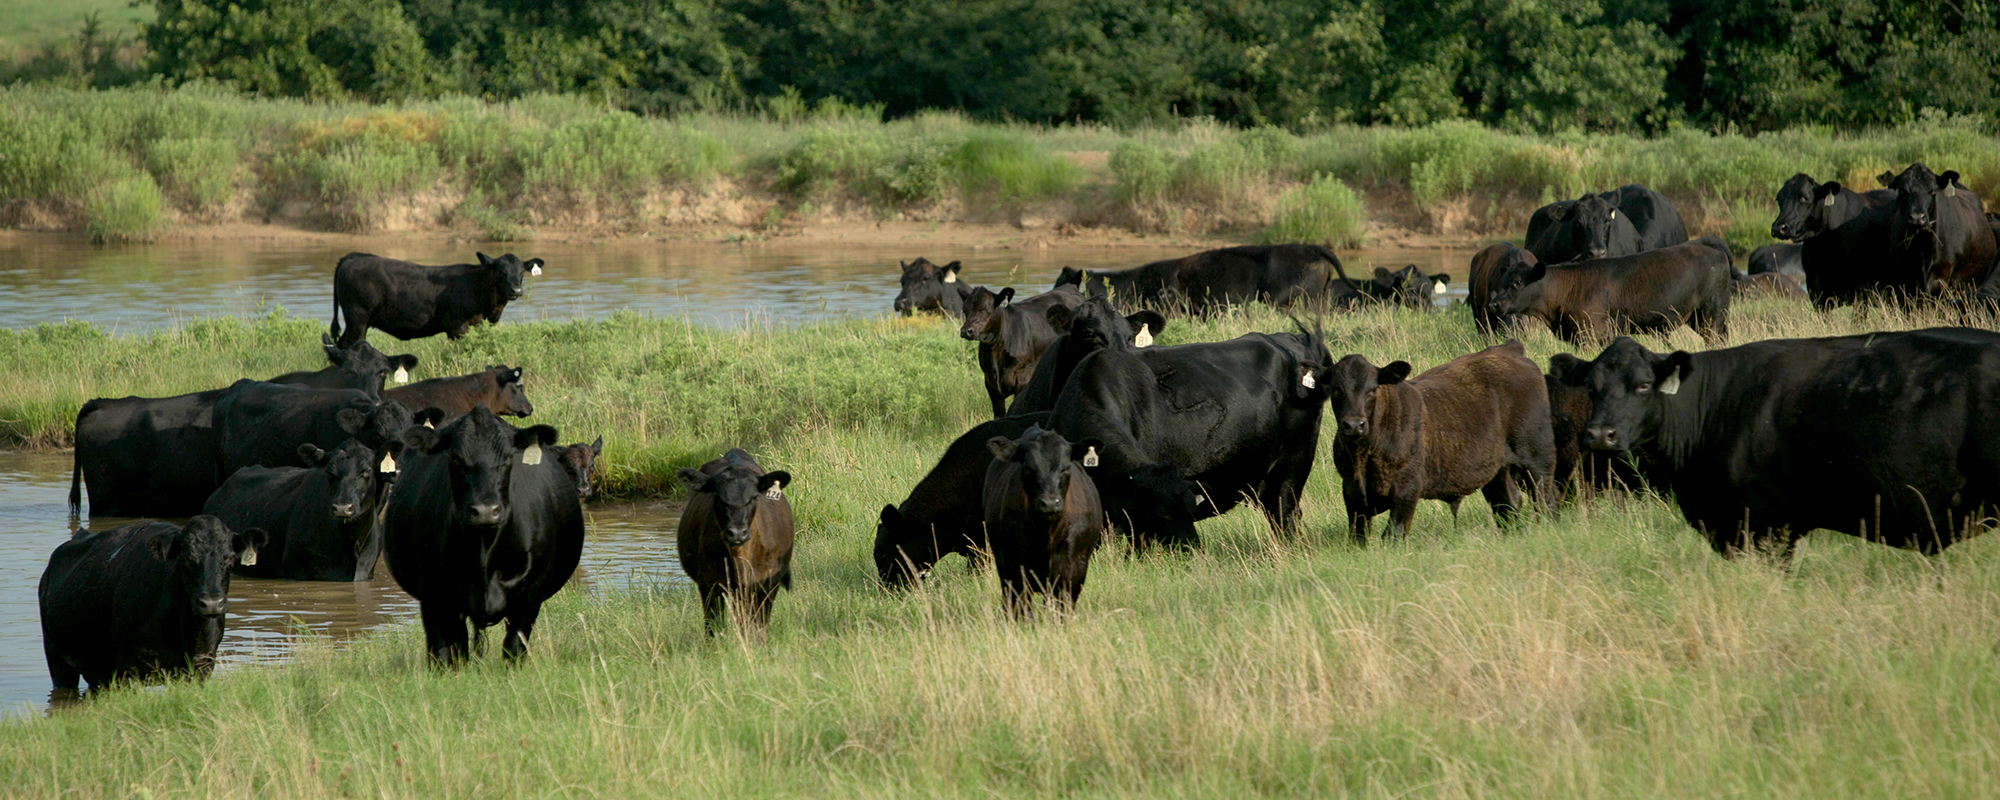 livestock grazing near pond